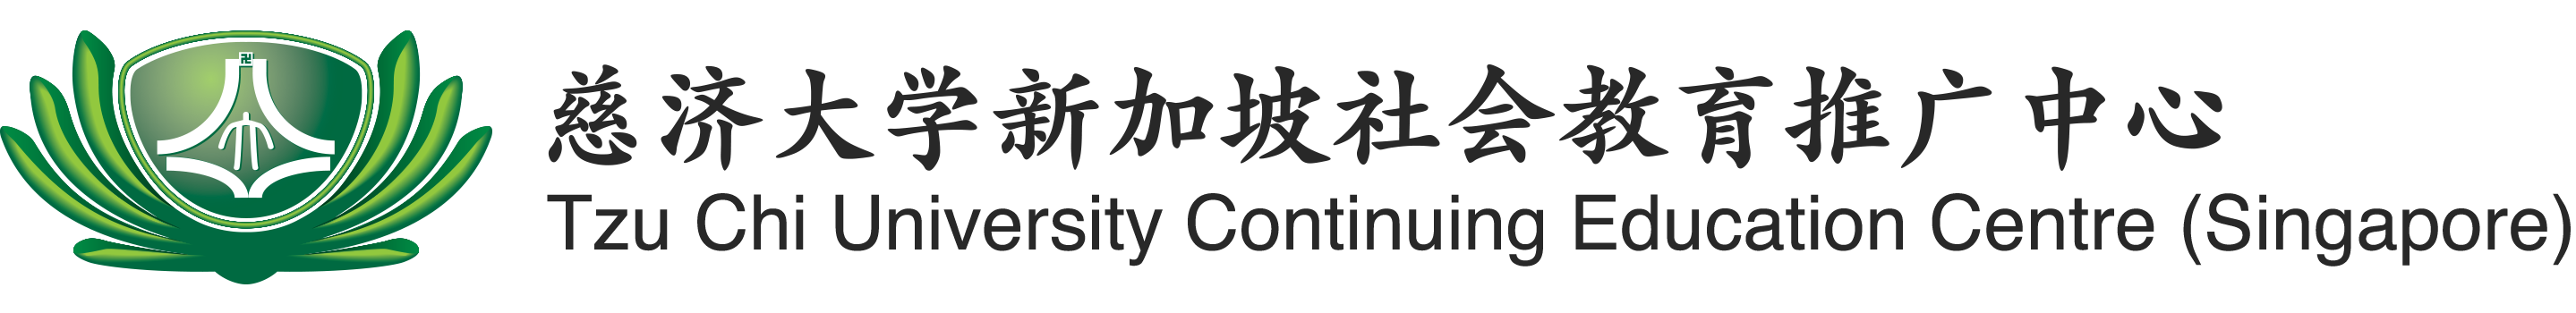 Tzu Chi University (Continuing Education Centres) Logo